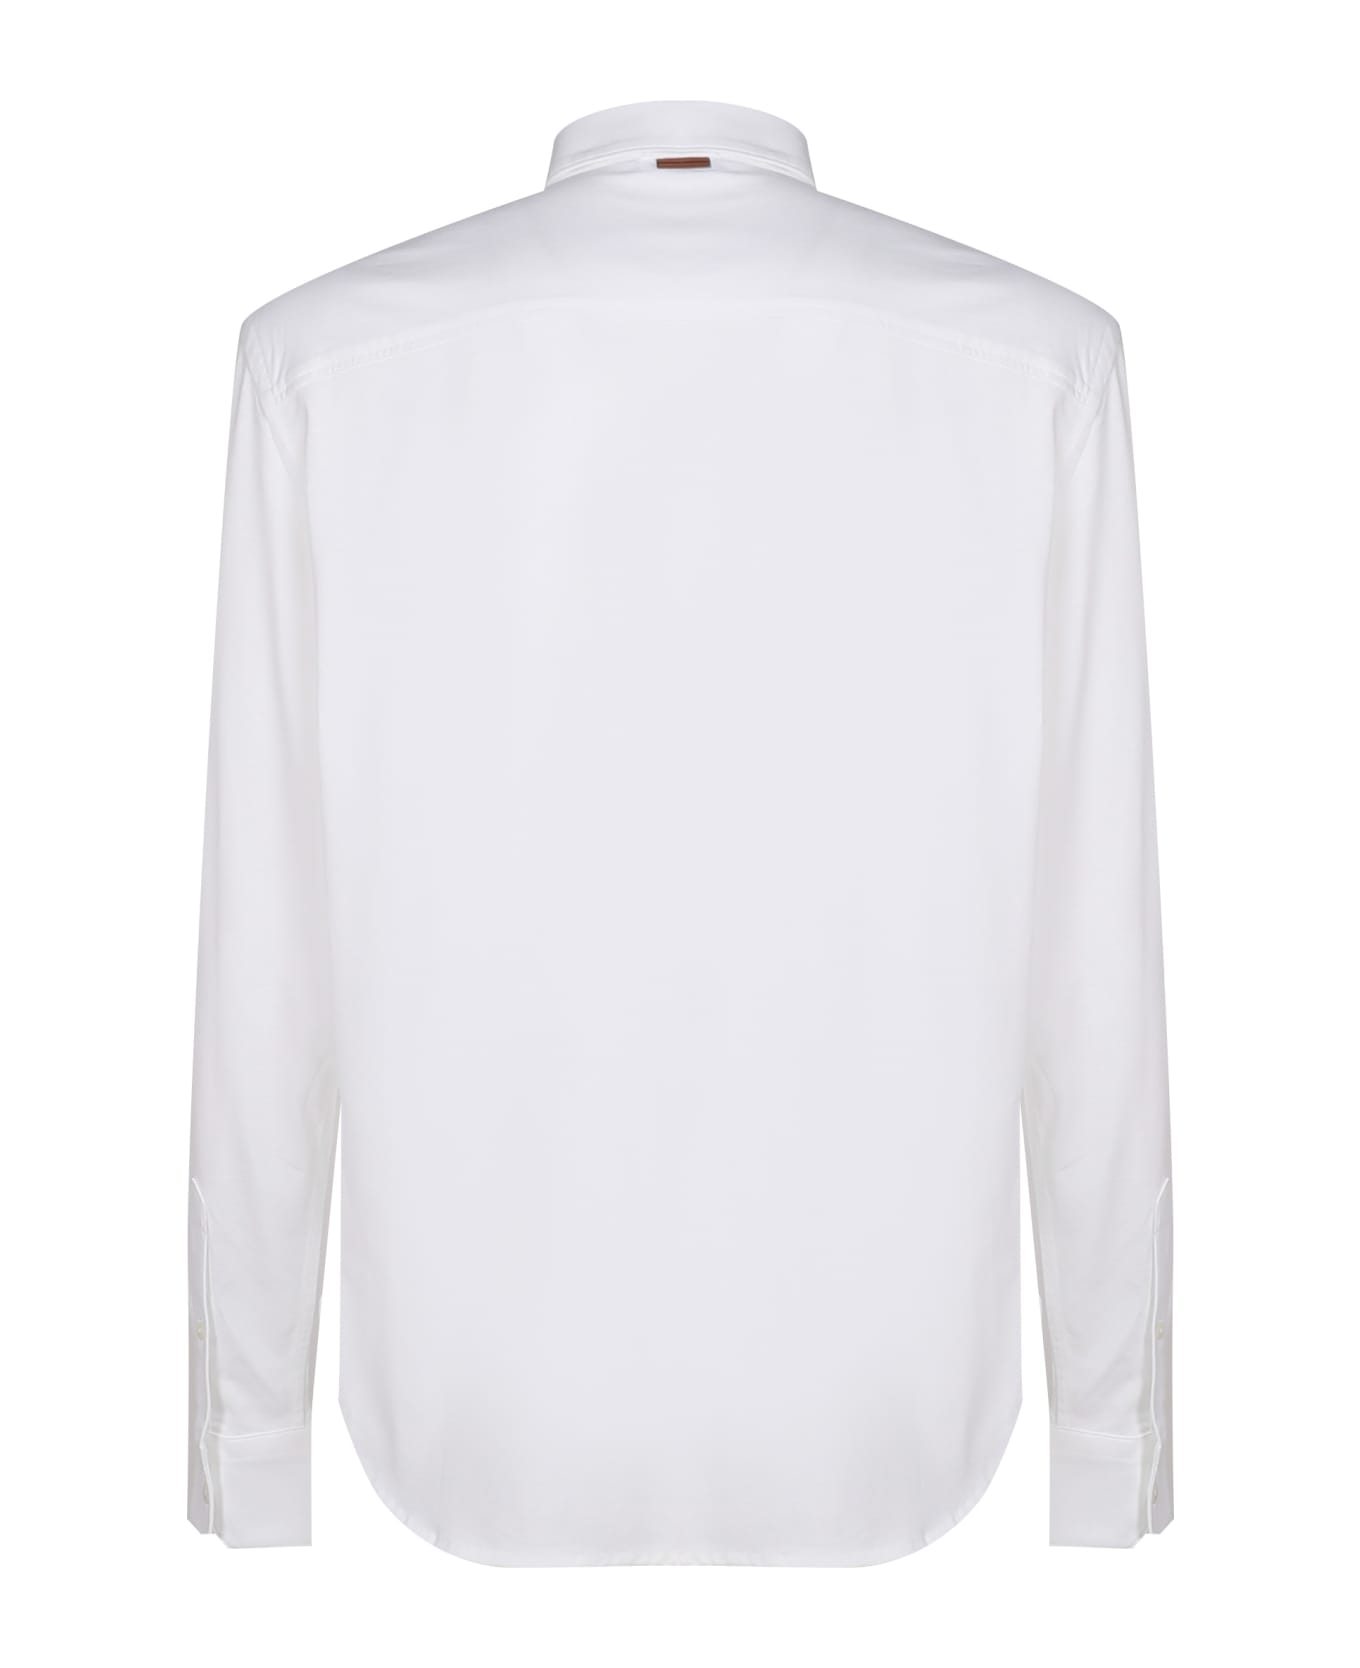 Zegna Cotton Jersey Shirt - White